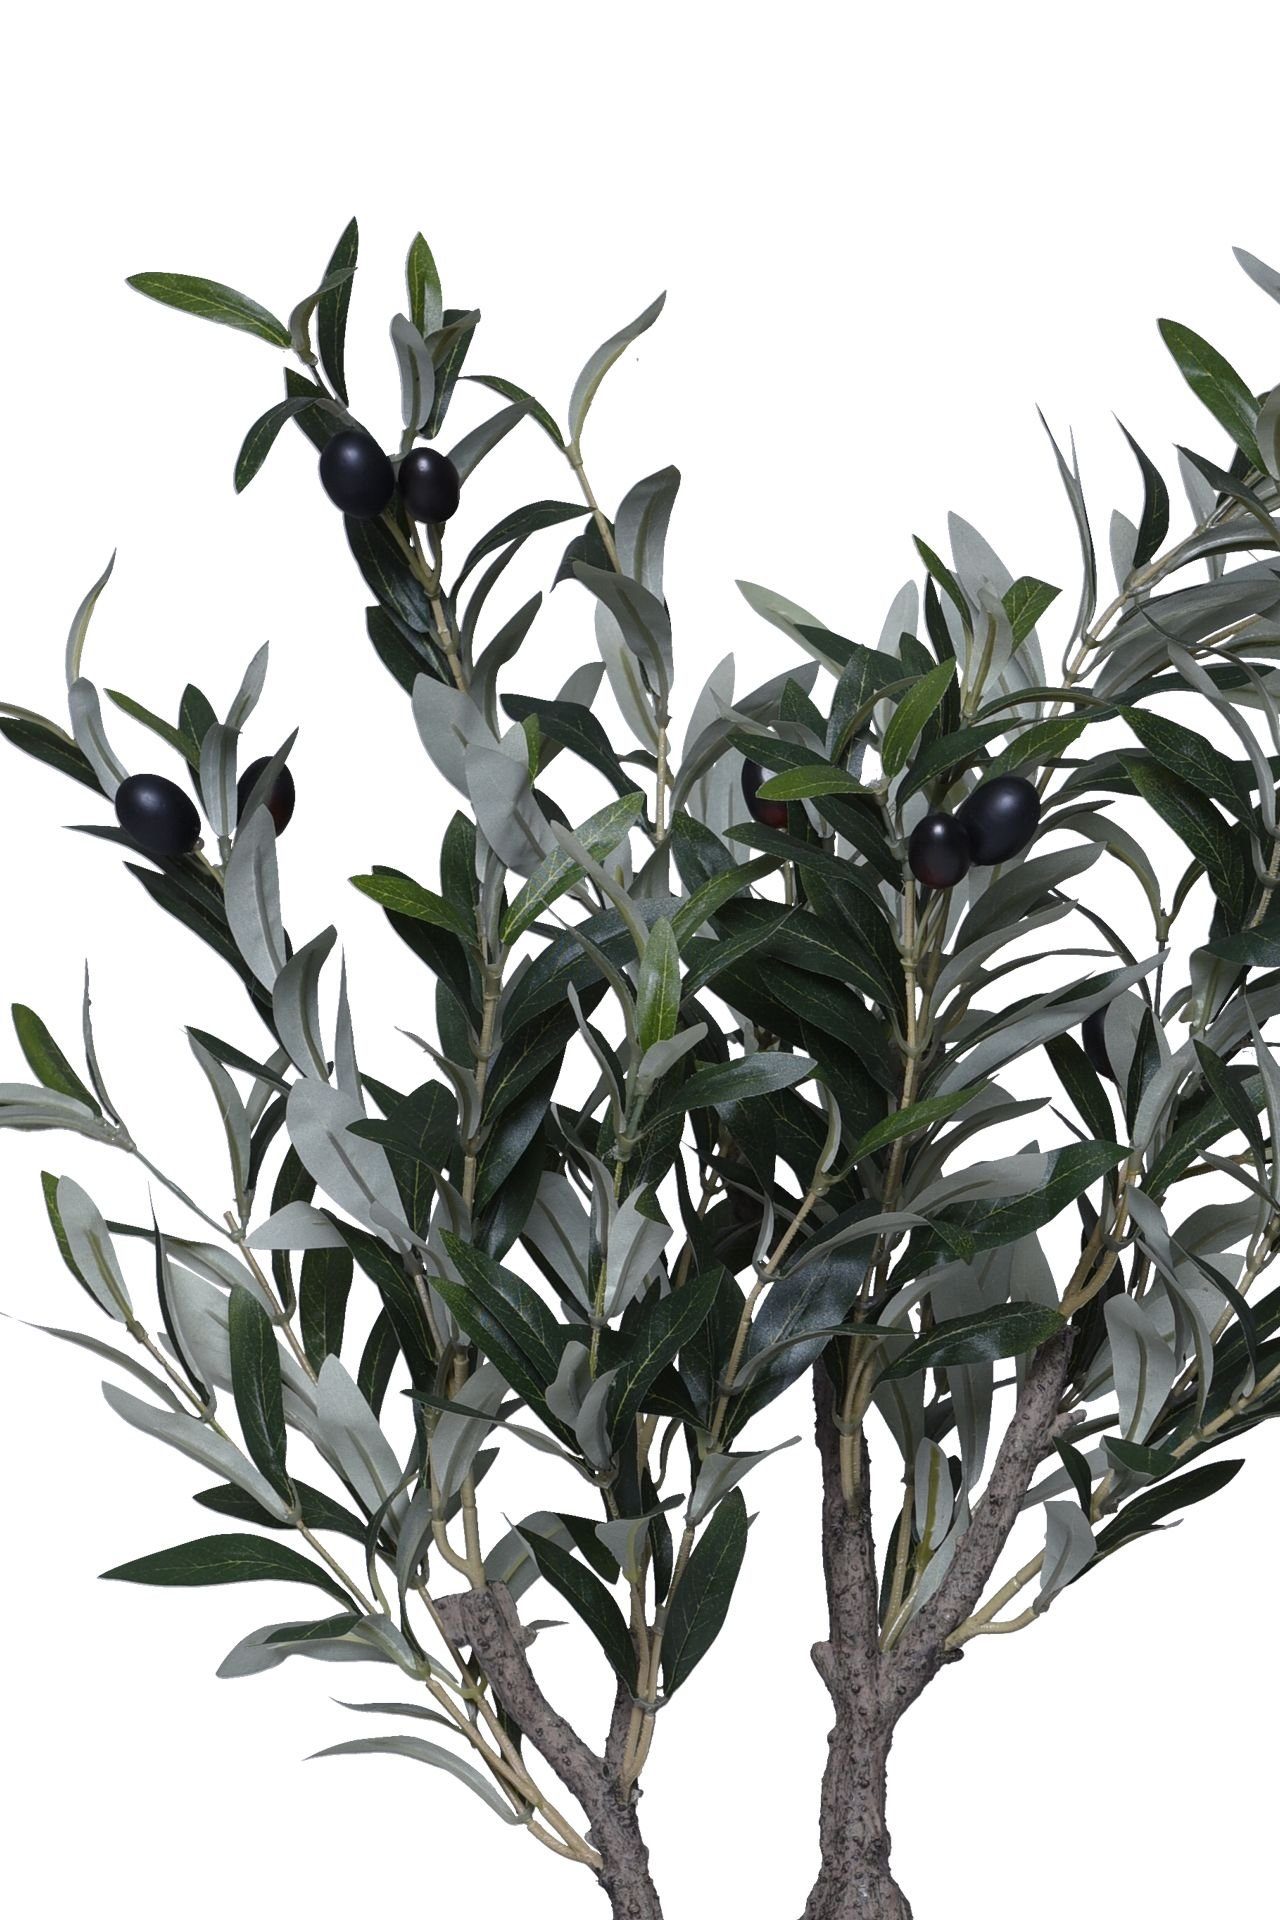 Kunstpflanze Kunstpflanze OLIVEIRA cm Höhe VIVANNO, 60 -, künstlicher im Olivenbaum Topf Kunststoff